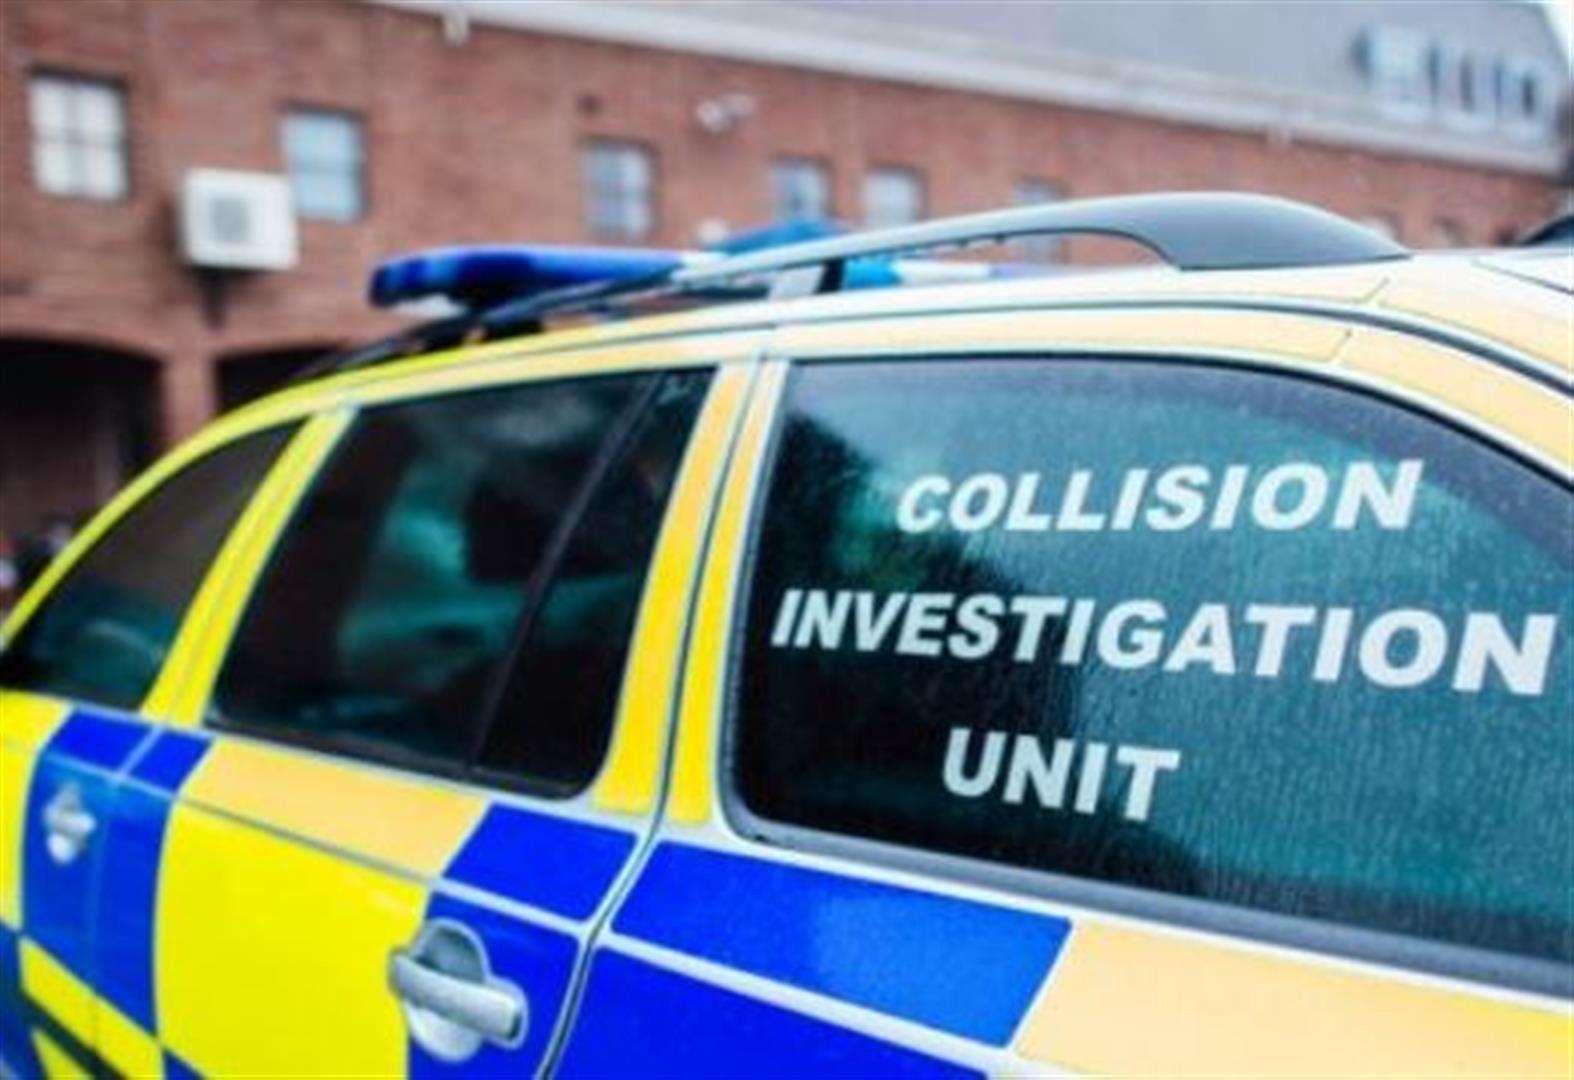 Kent Police collision investigation unit - Stock Image (2770282)